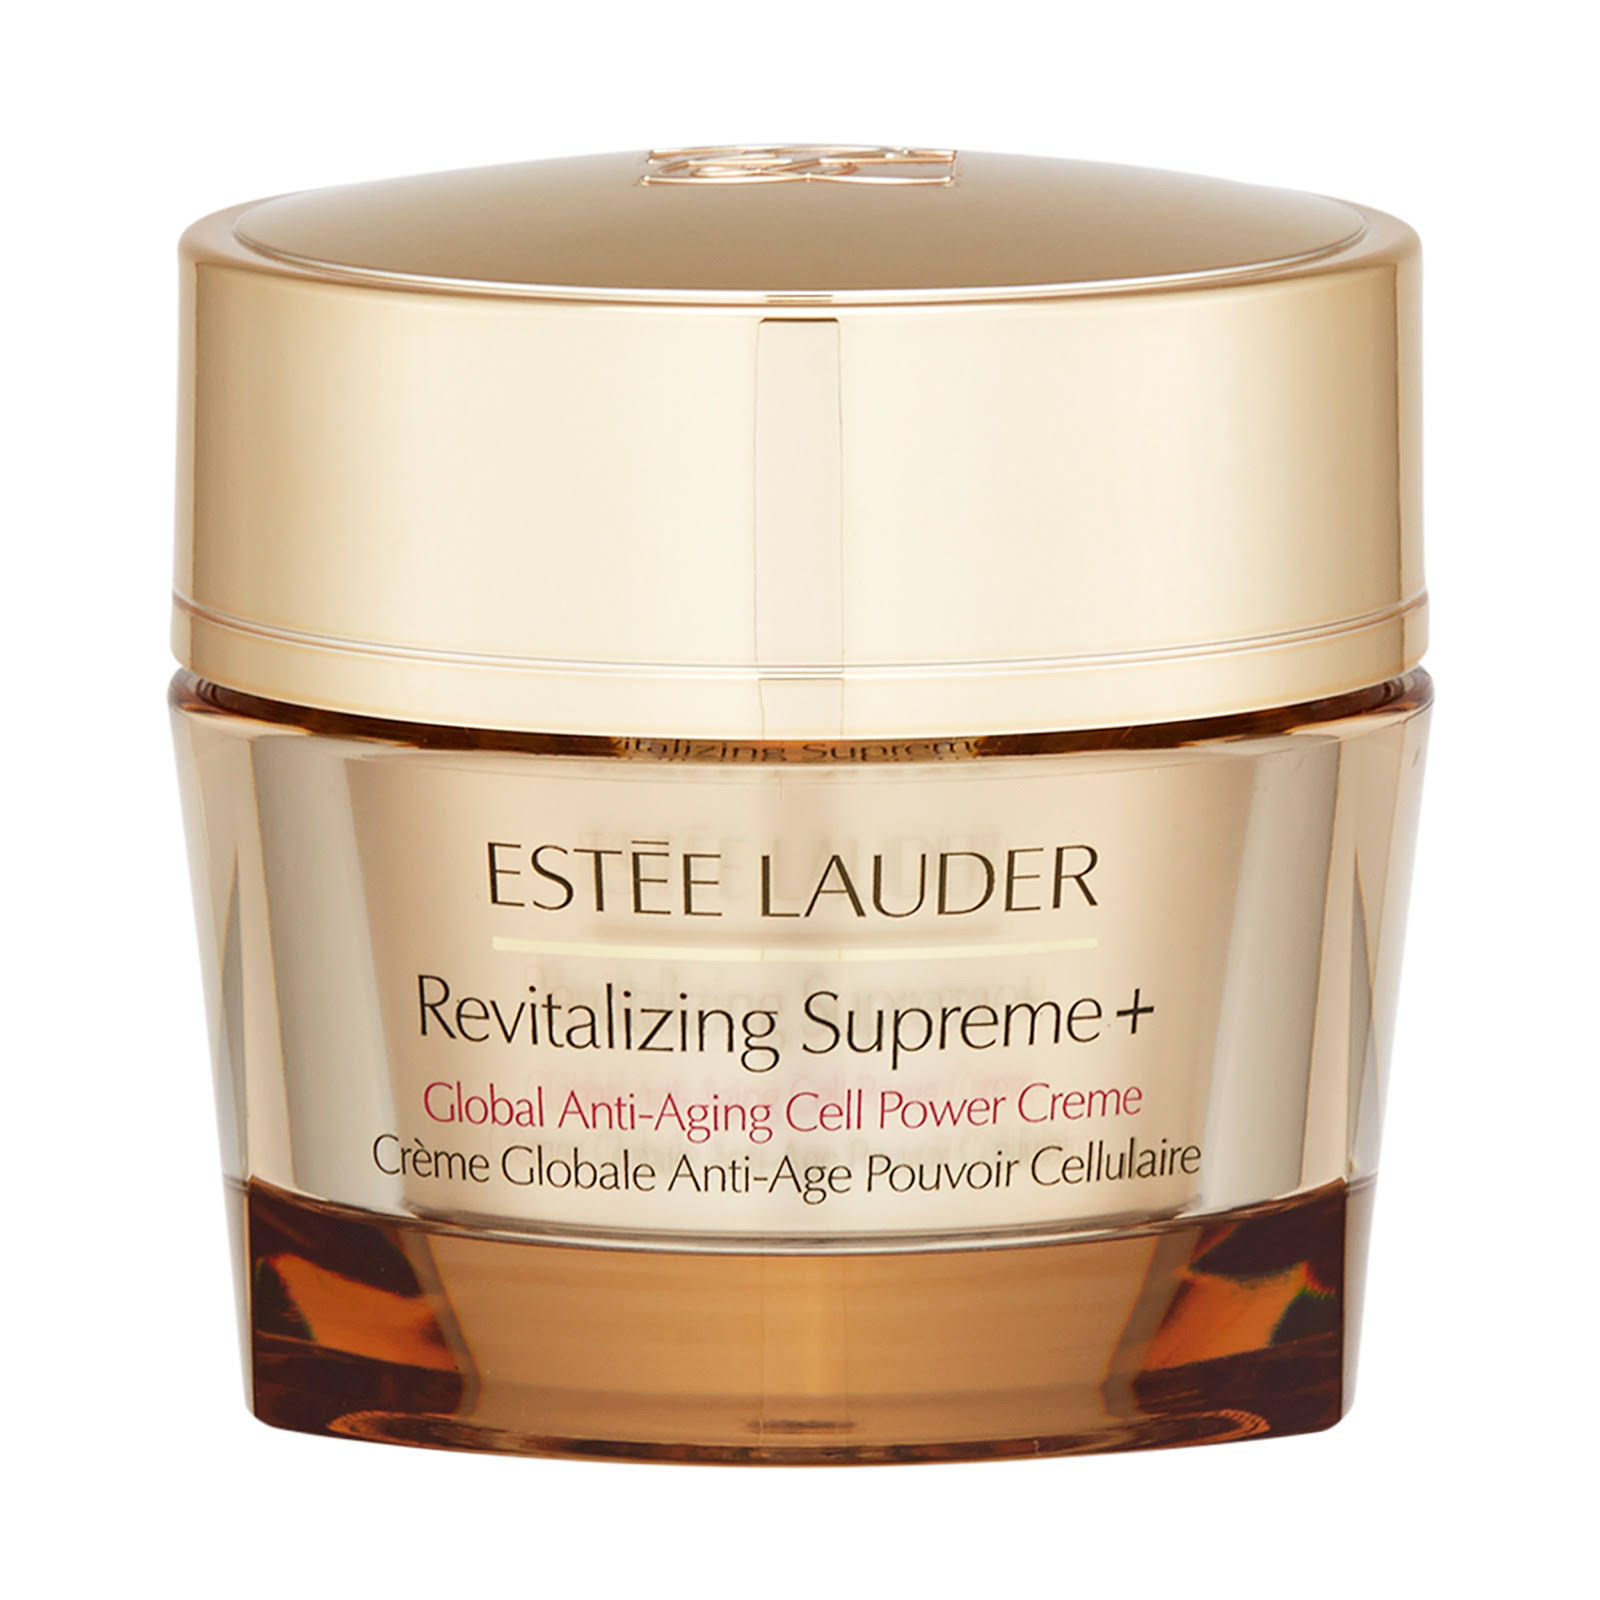 Estee Lauder Revitalizing Supreme + Global Anti-Aging Cell Power Creme 50ml